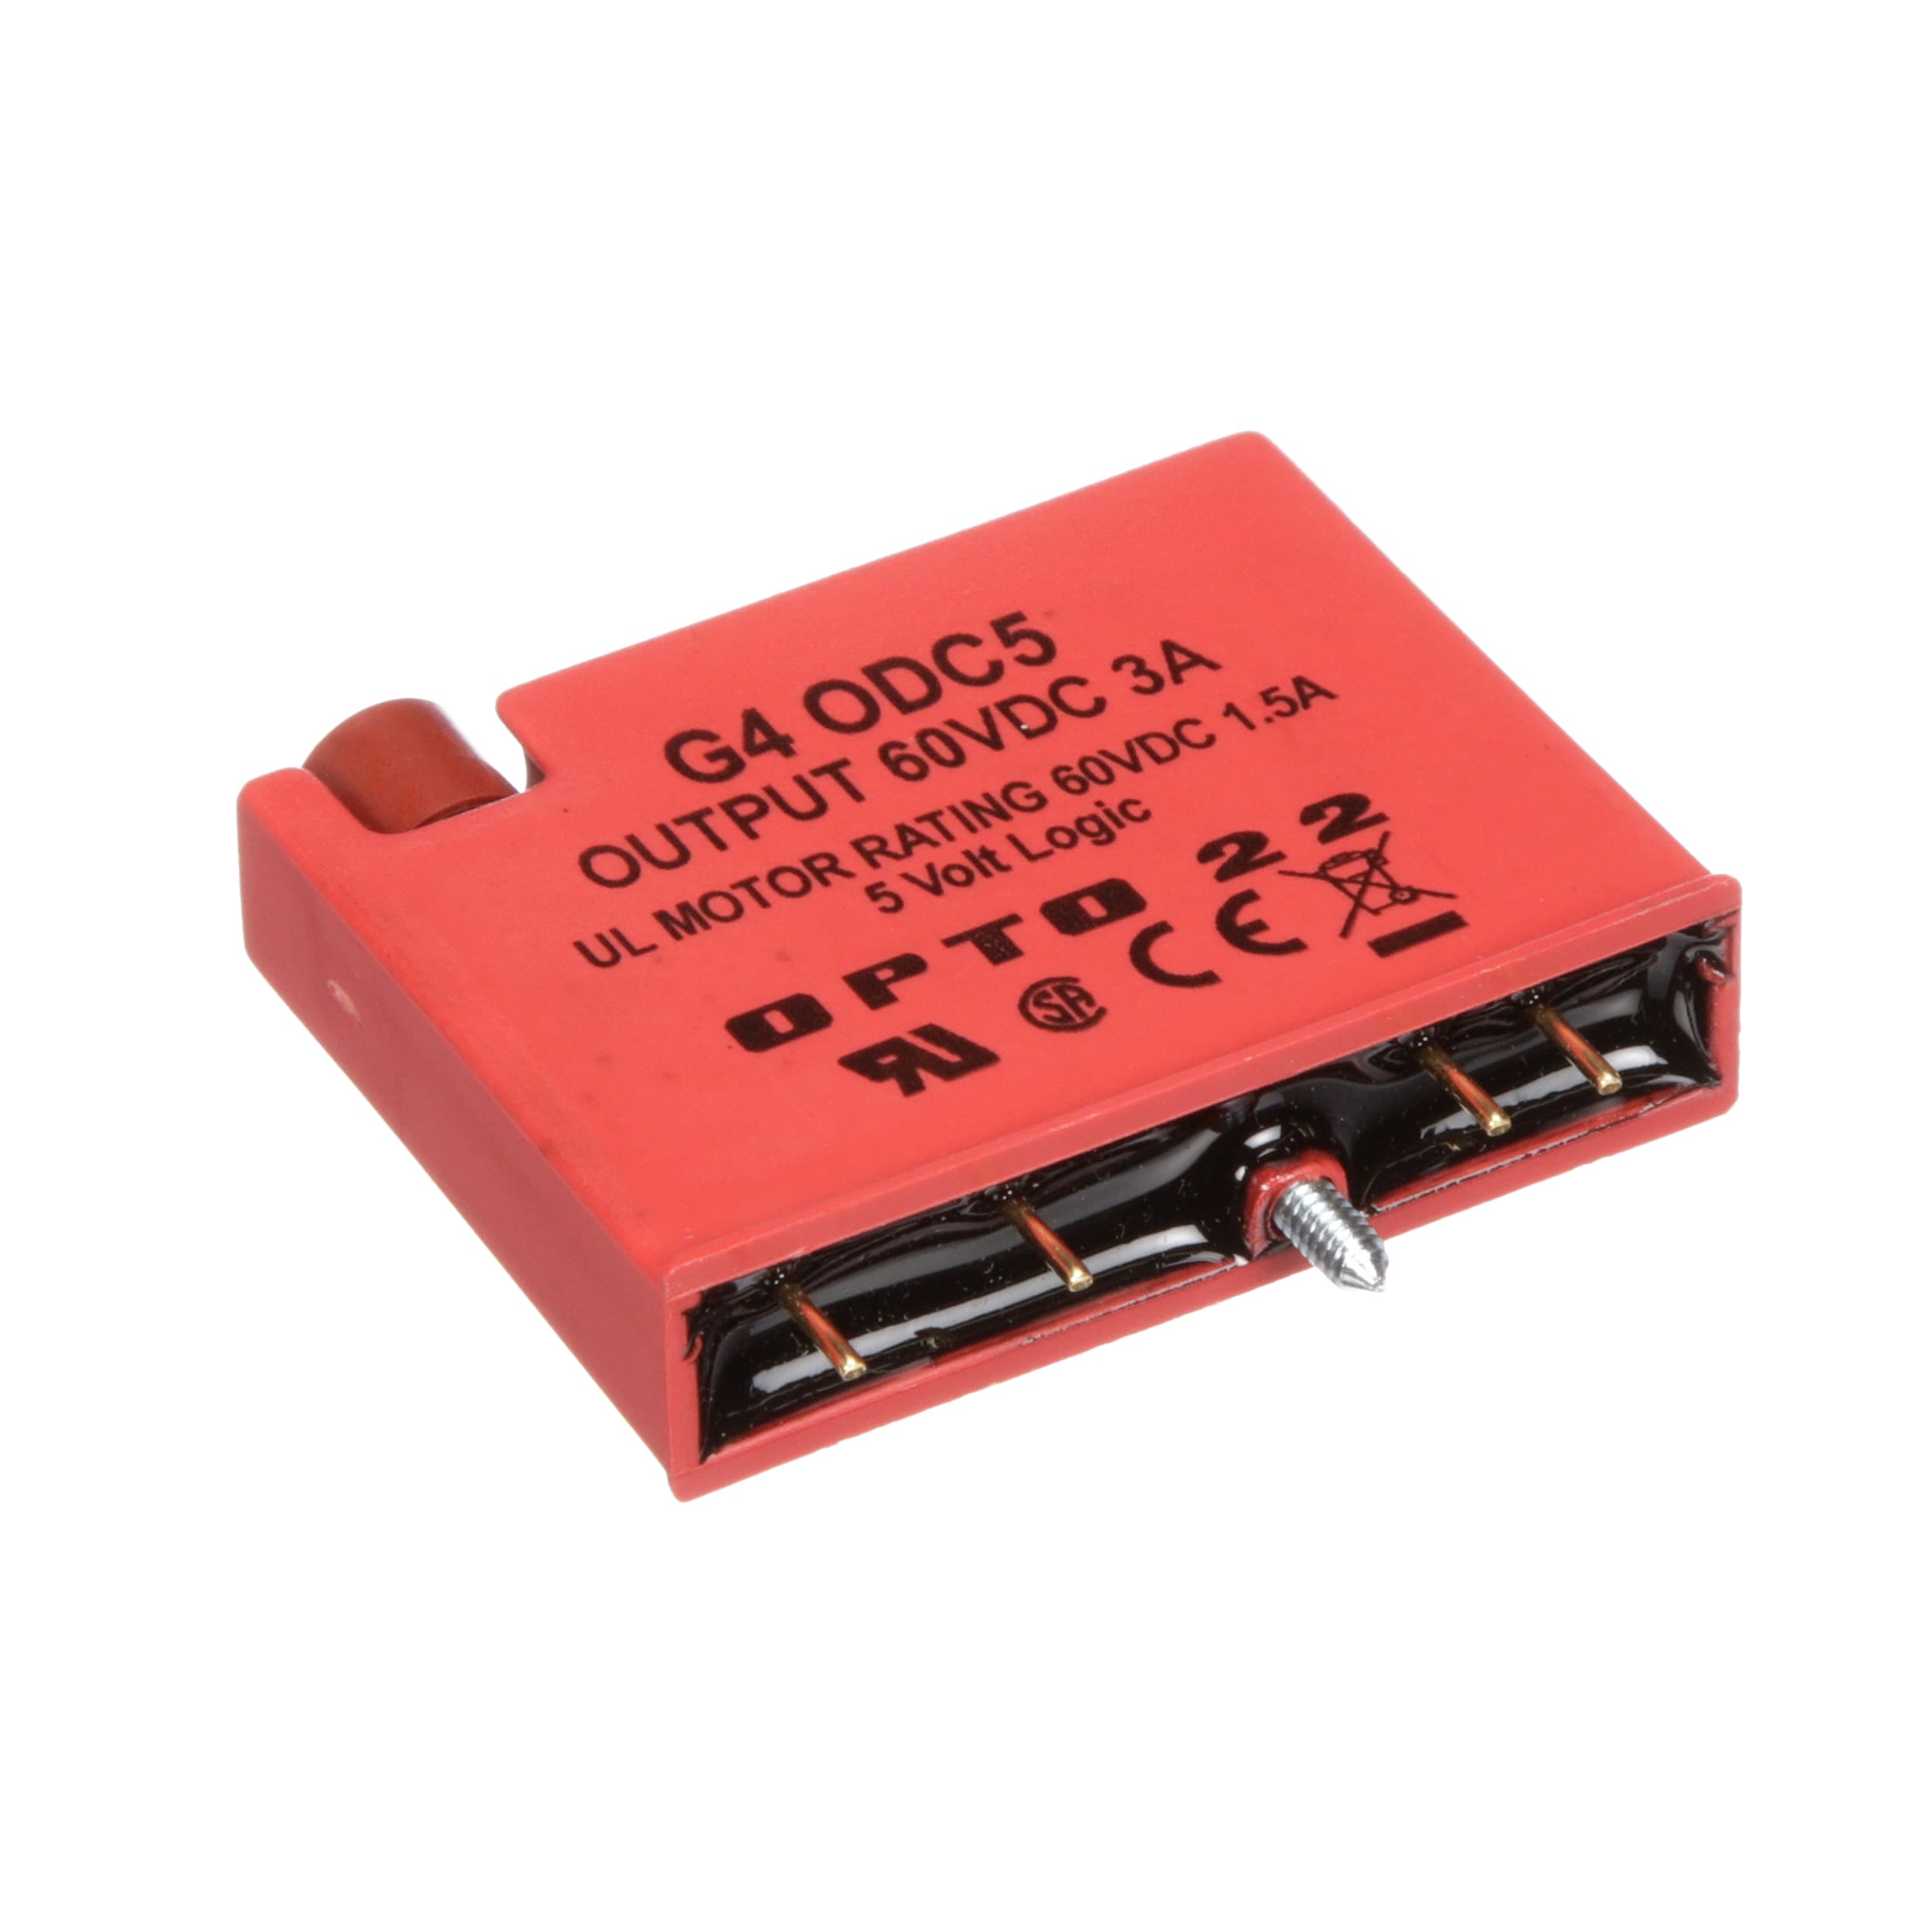 ZEK204 OPTO 22 G4ODC5 Digital DC Output Module 3A 5-60VDC Output 5VDC Logic 